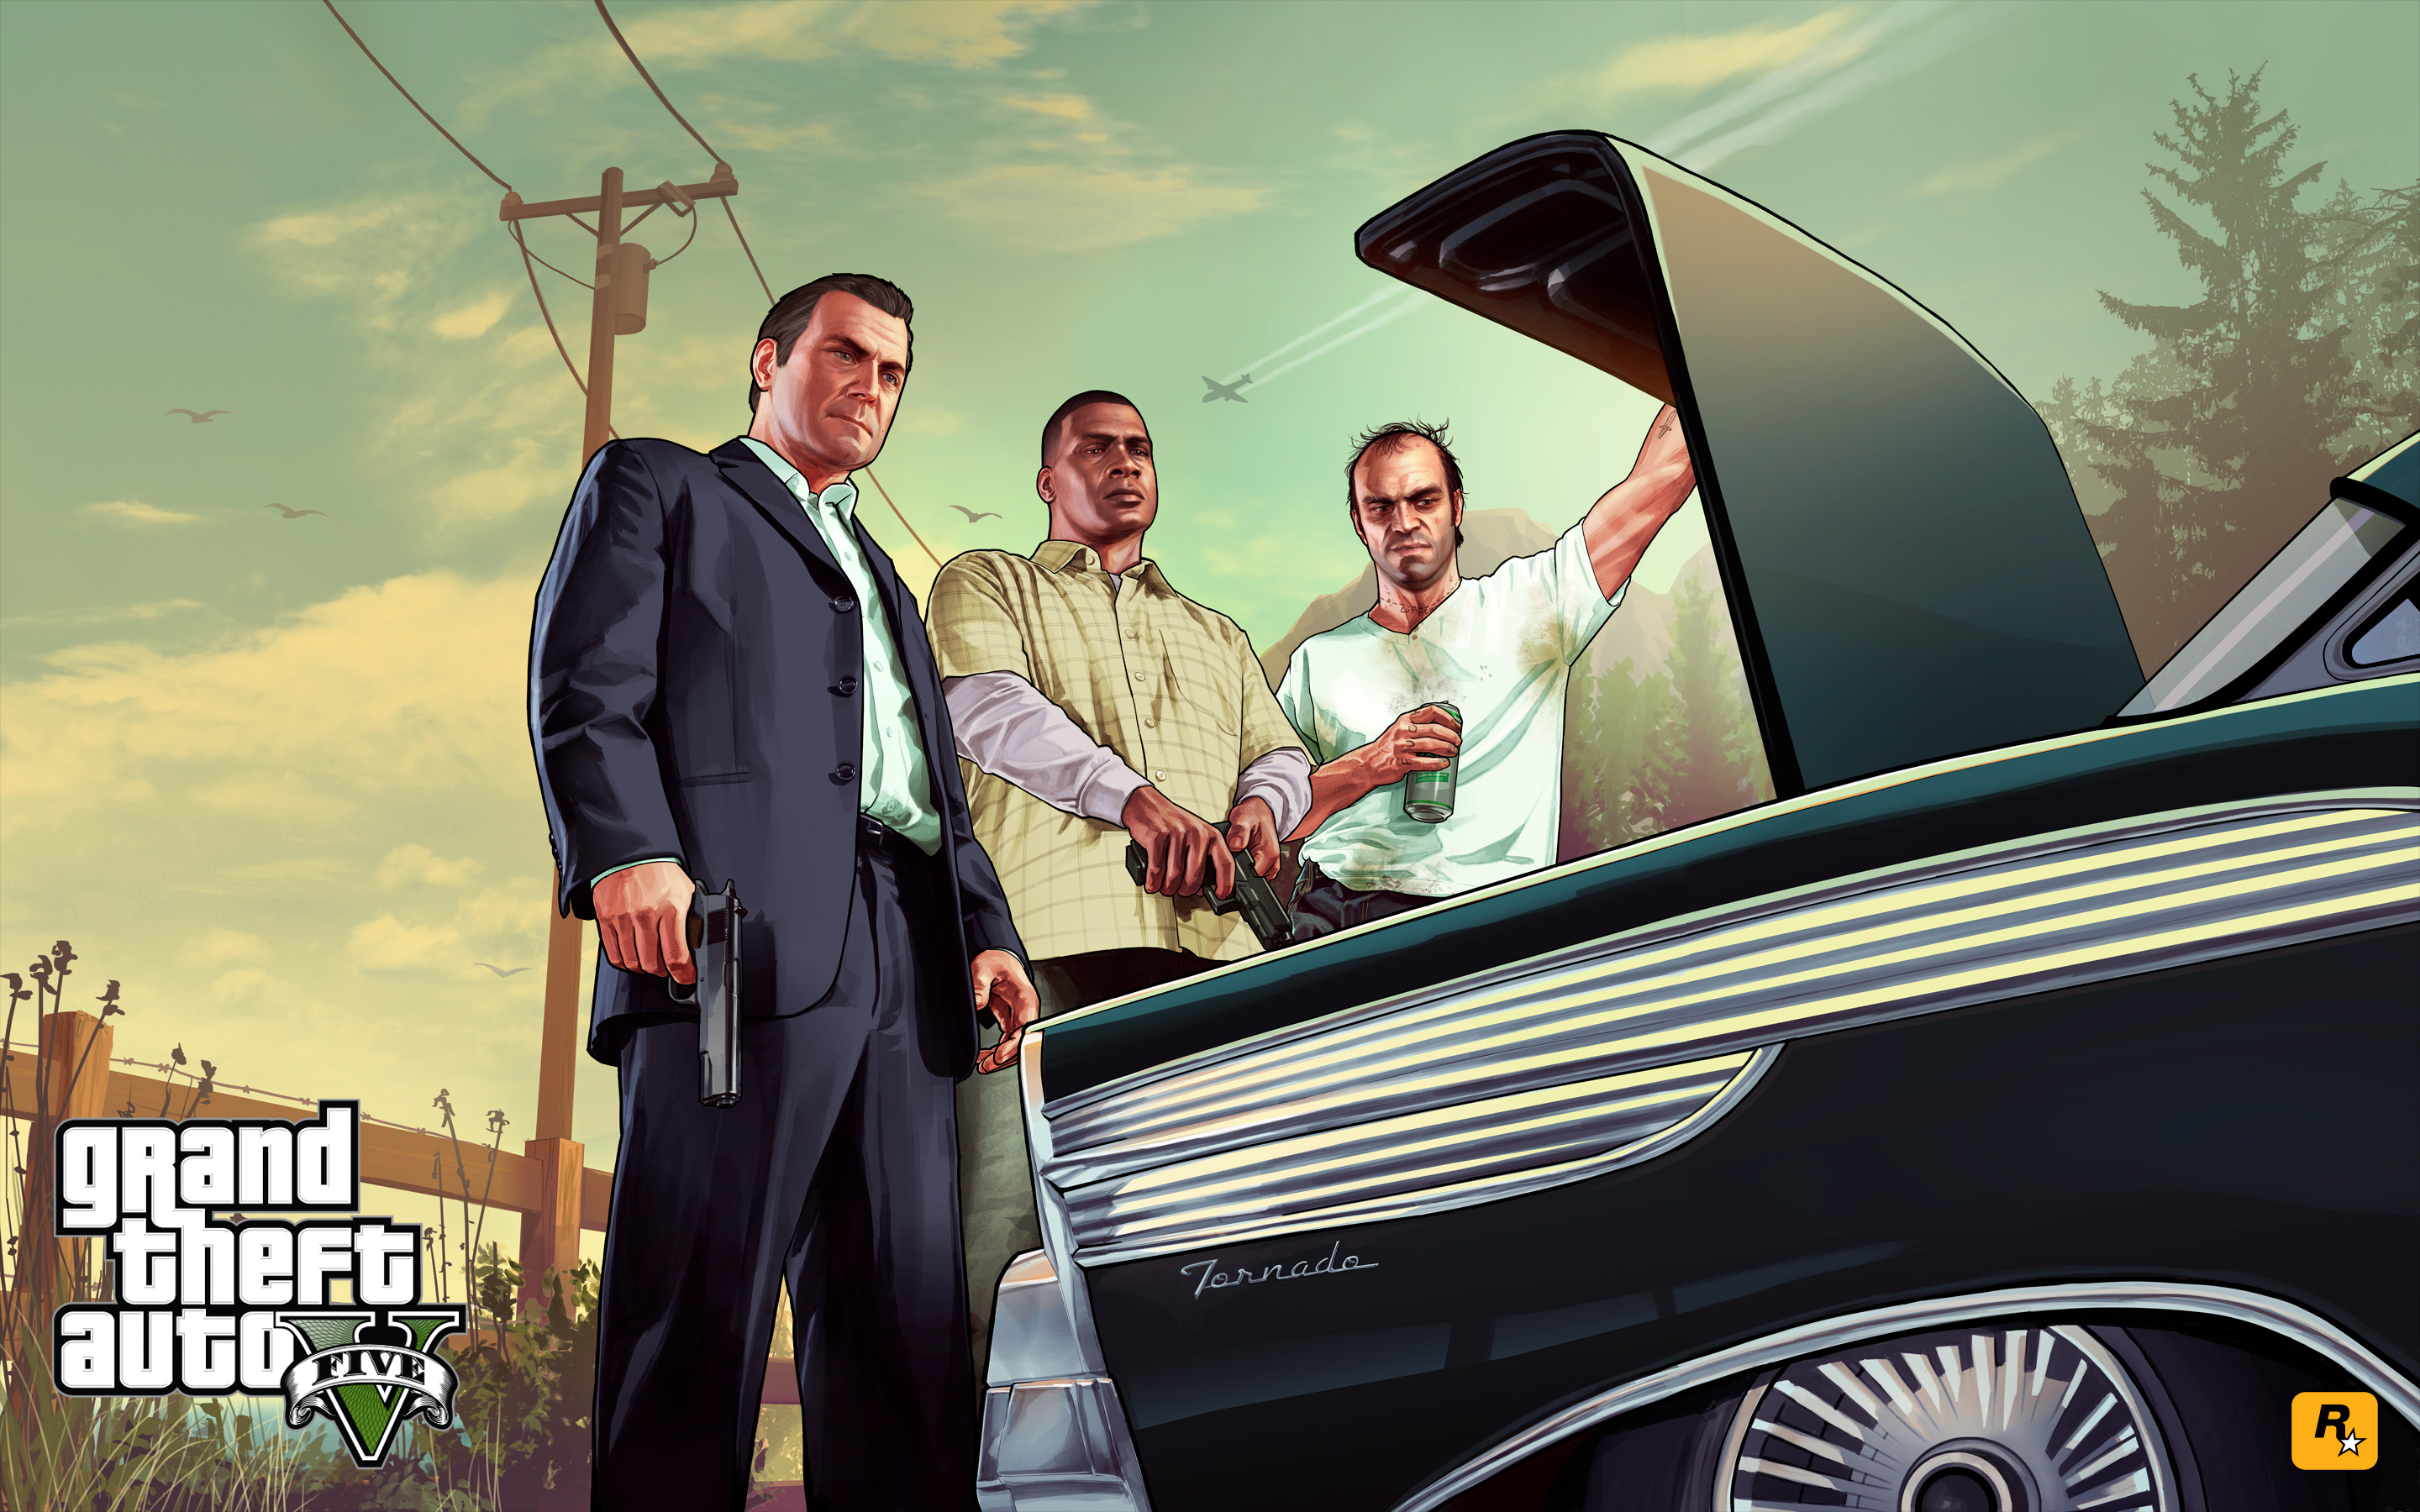 Video Game Grand Theft Auto V HD Wallpaper